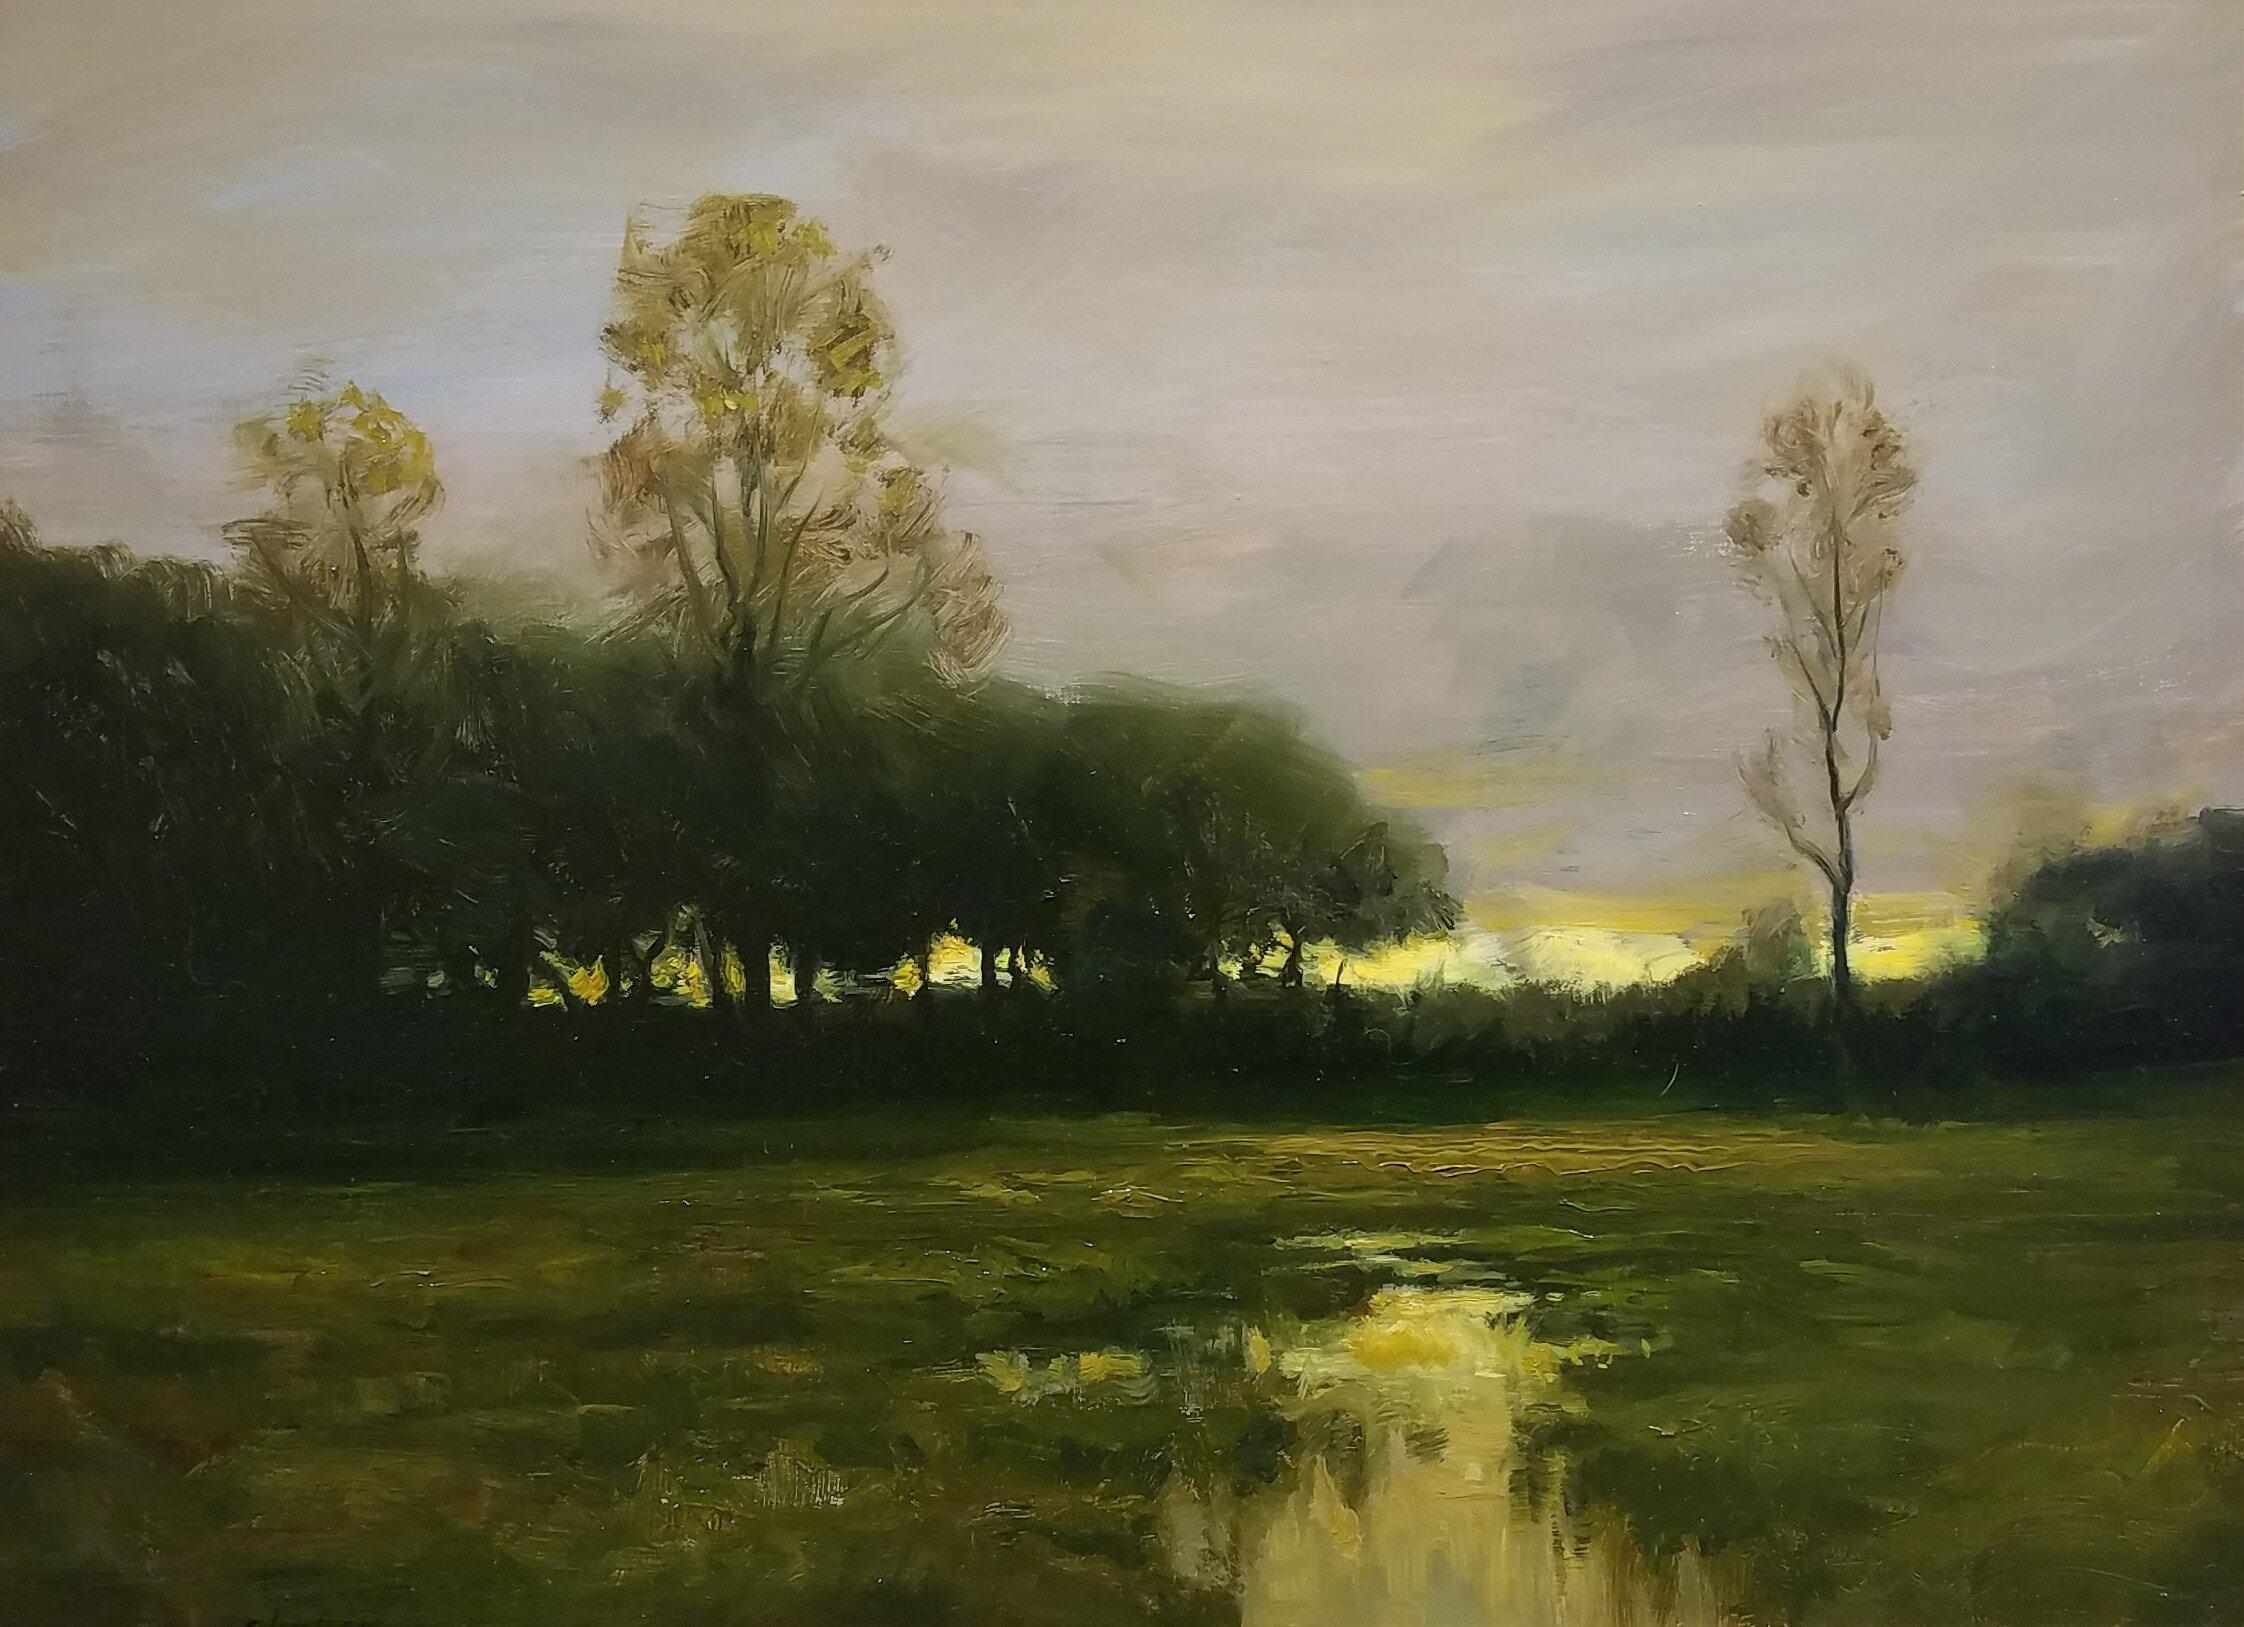 Dennis Sheehan, "Across the Marsh", 18x24 Tonalist Landscape Oil Painting 